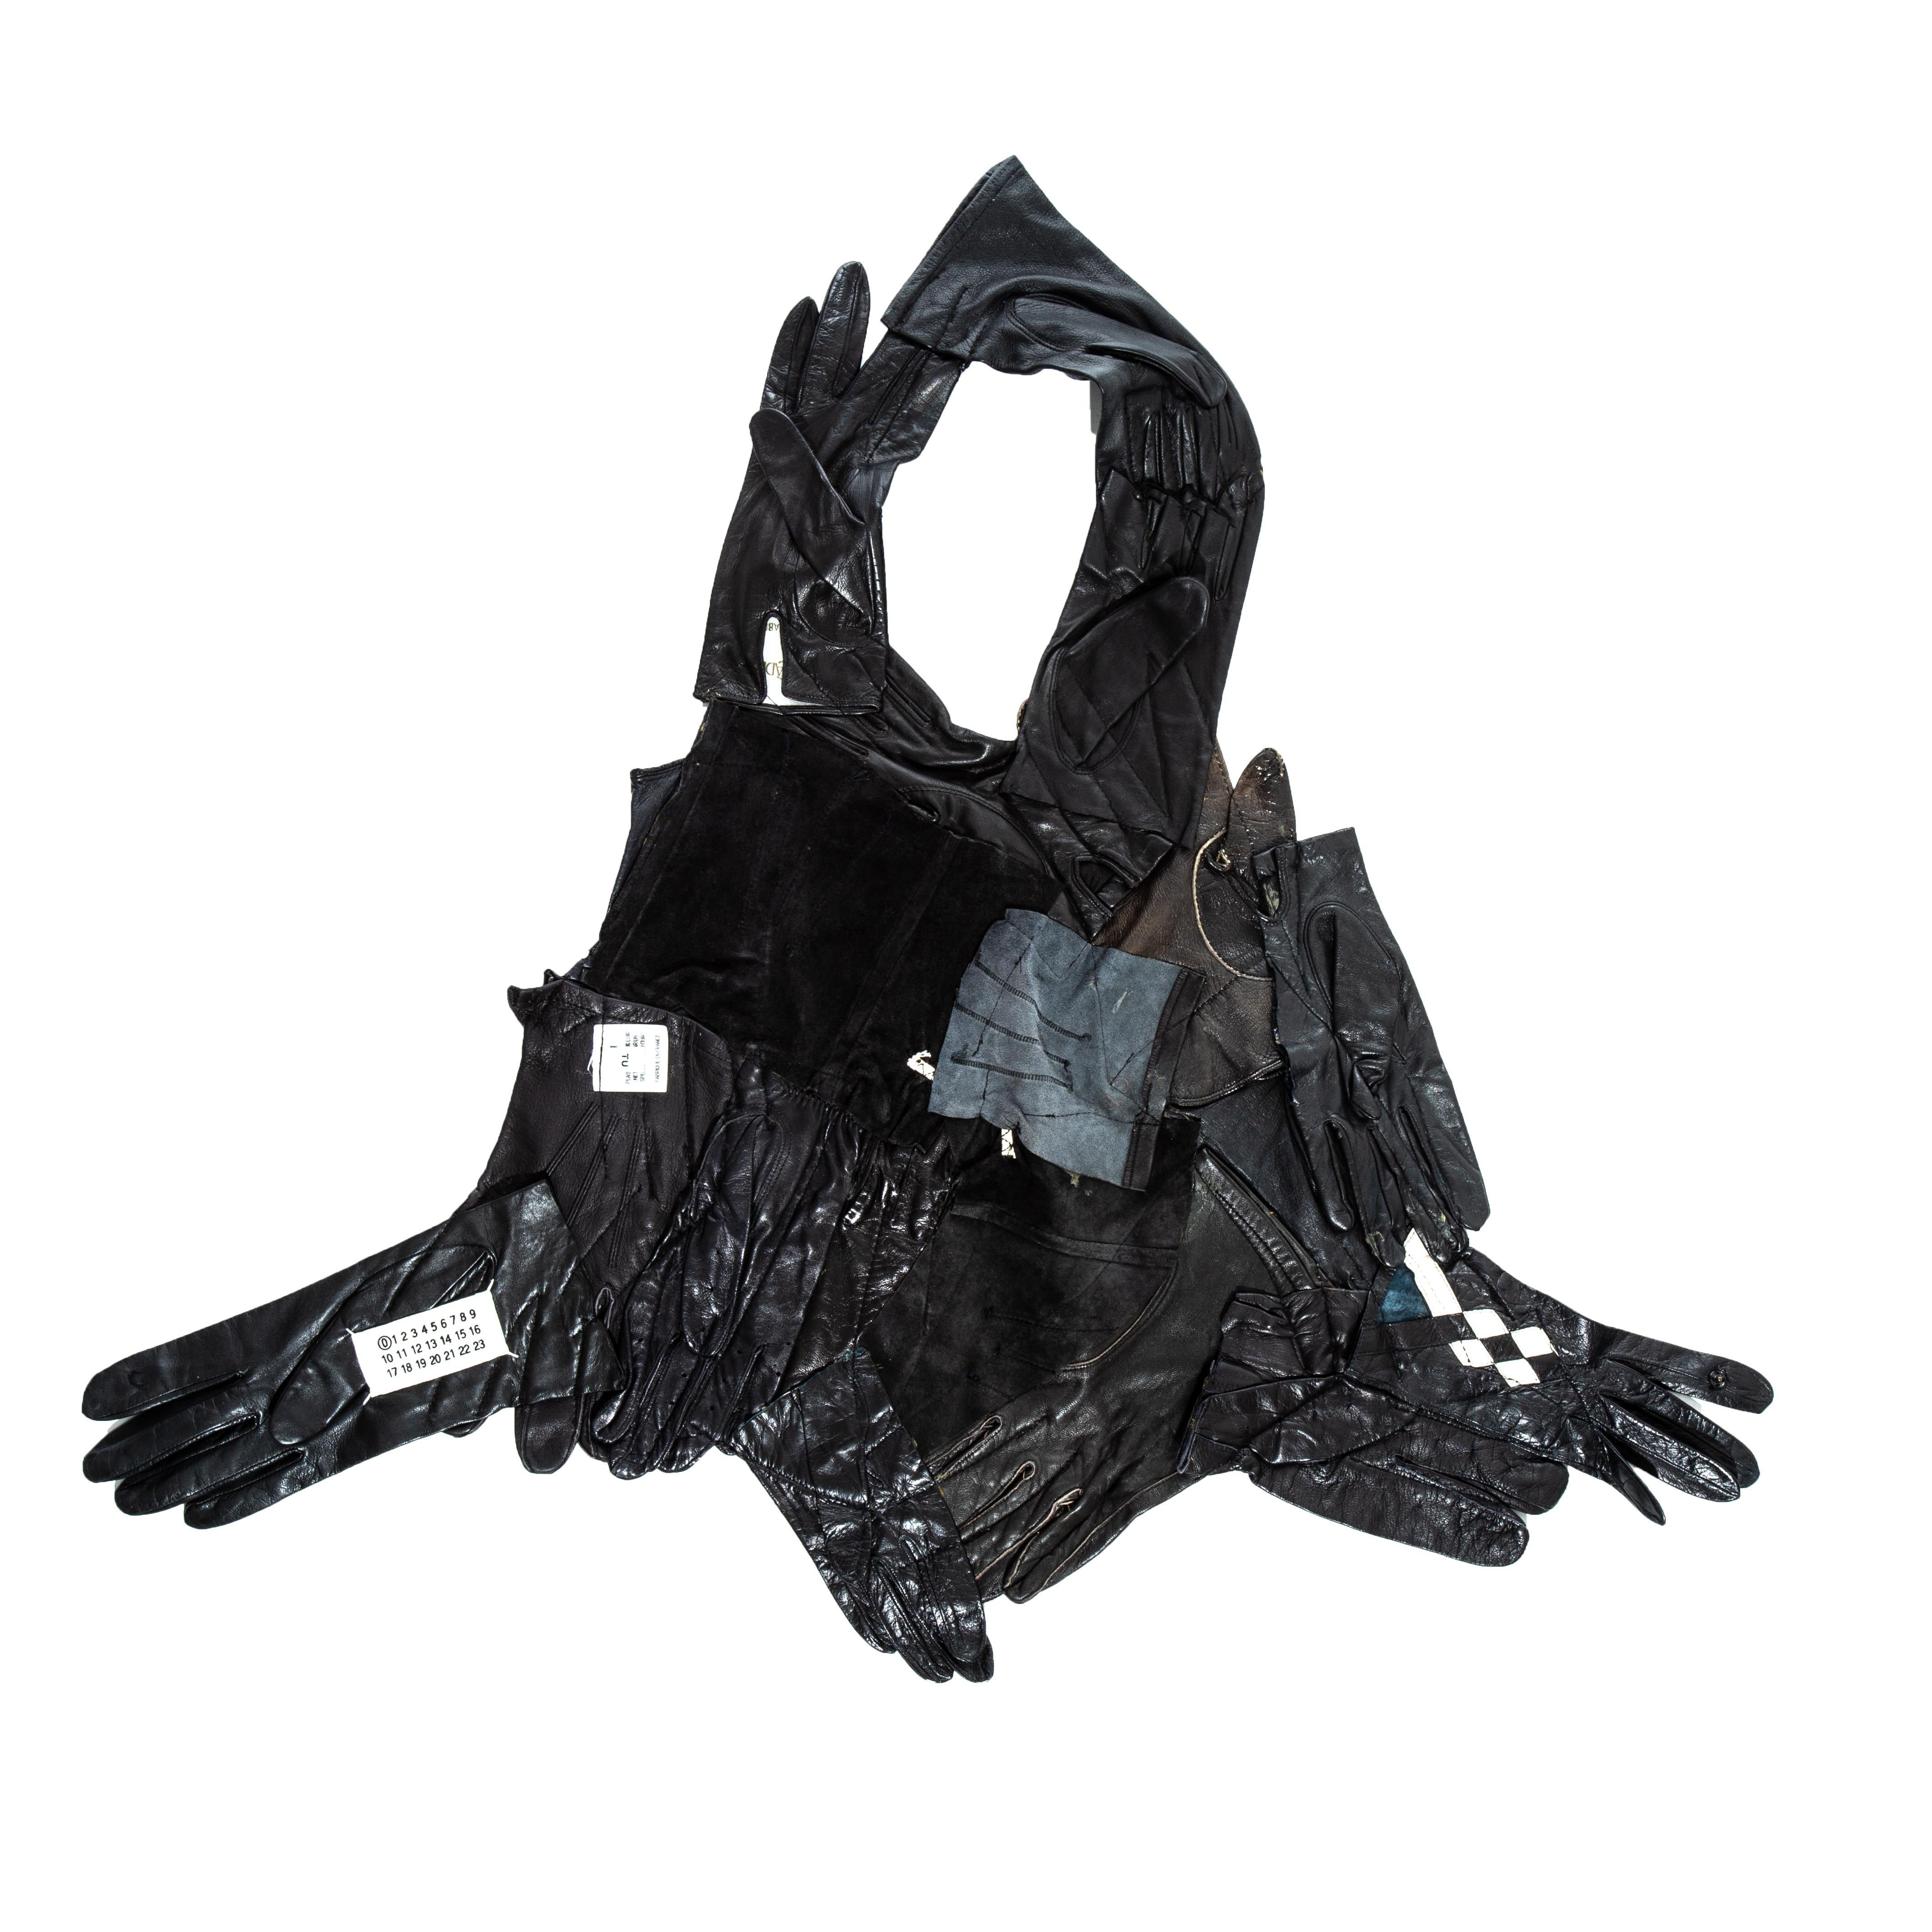 Margiela artisanal black leather glove top, ss 2001 1